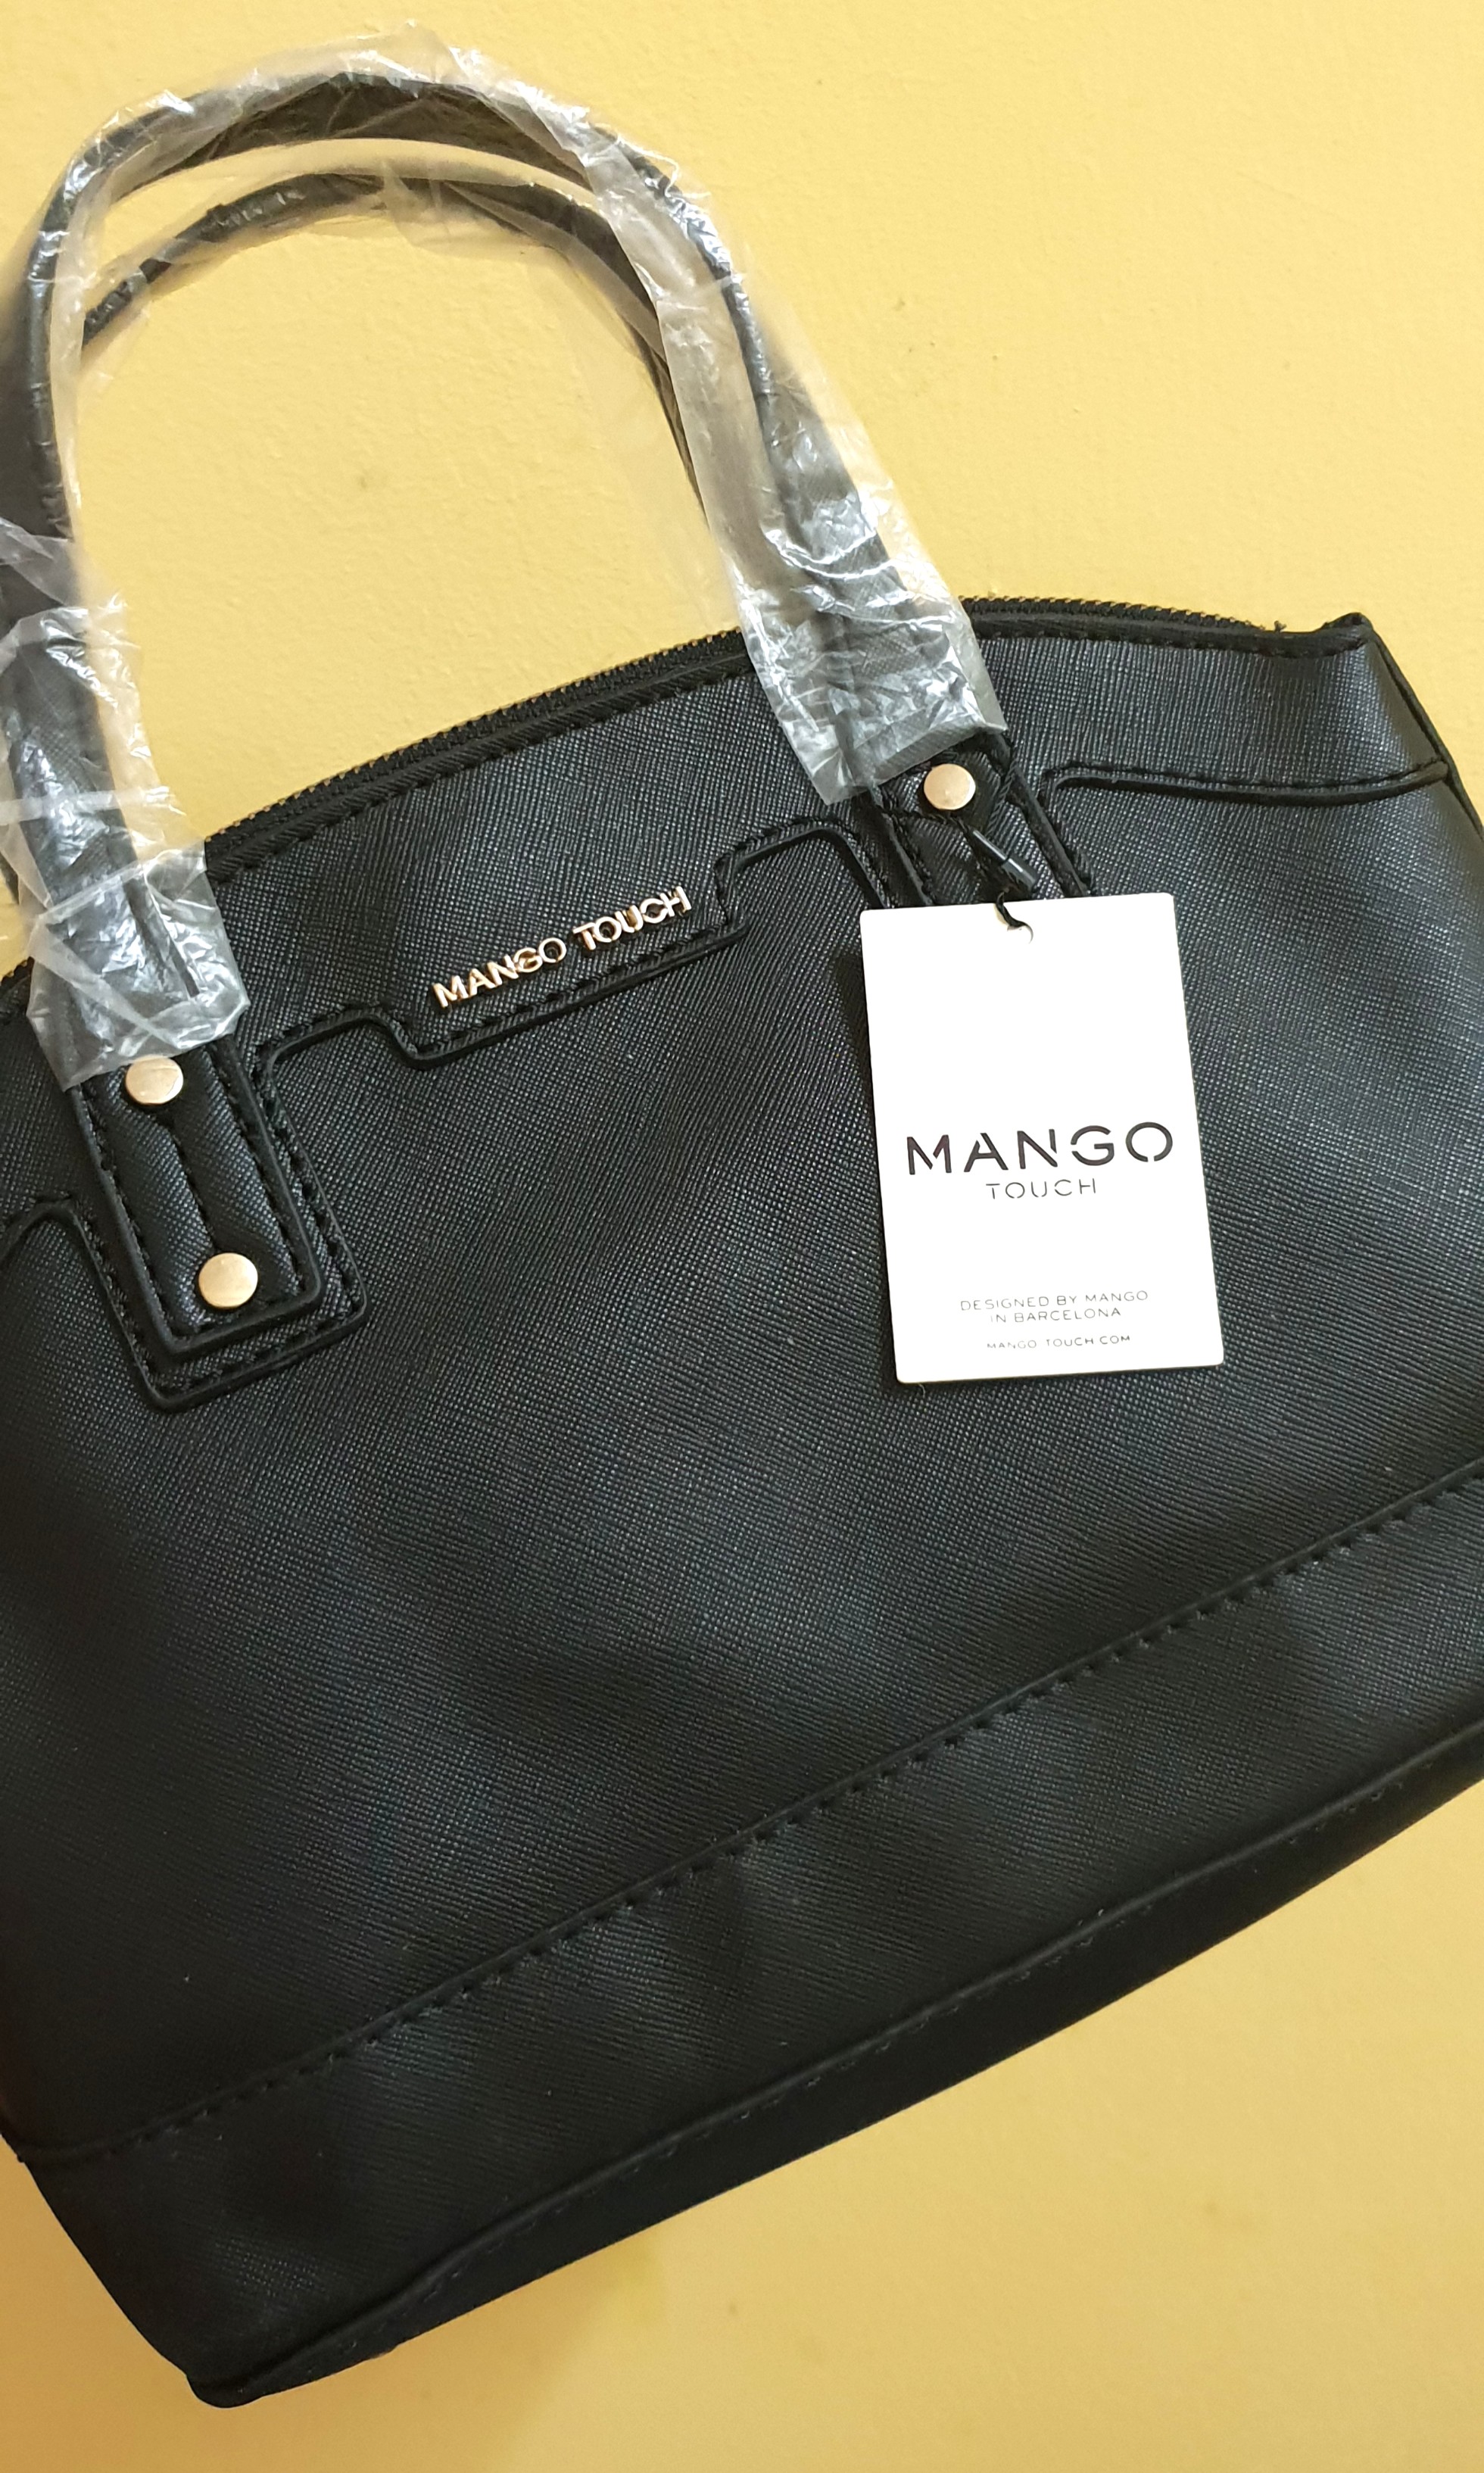 Mango Purse With Crossbody Strap | eBay